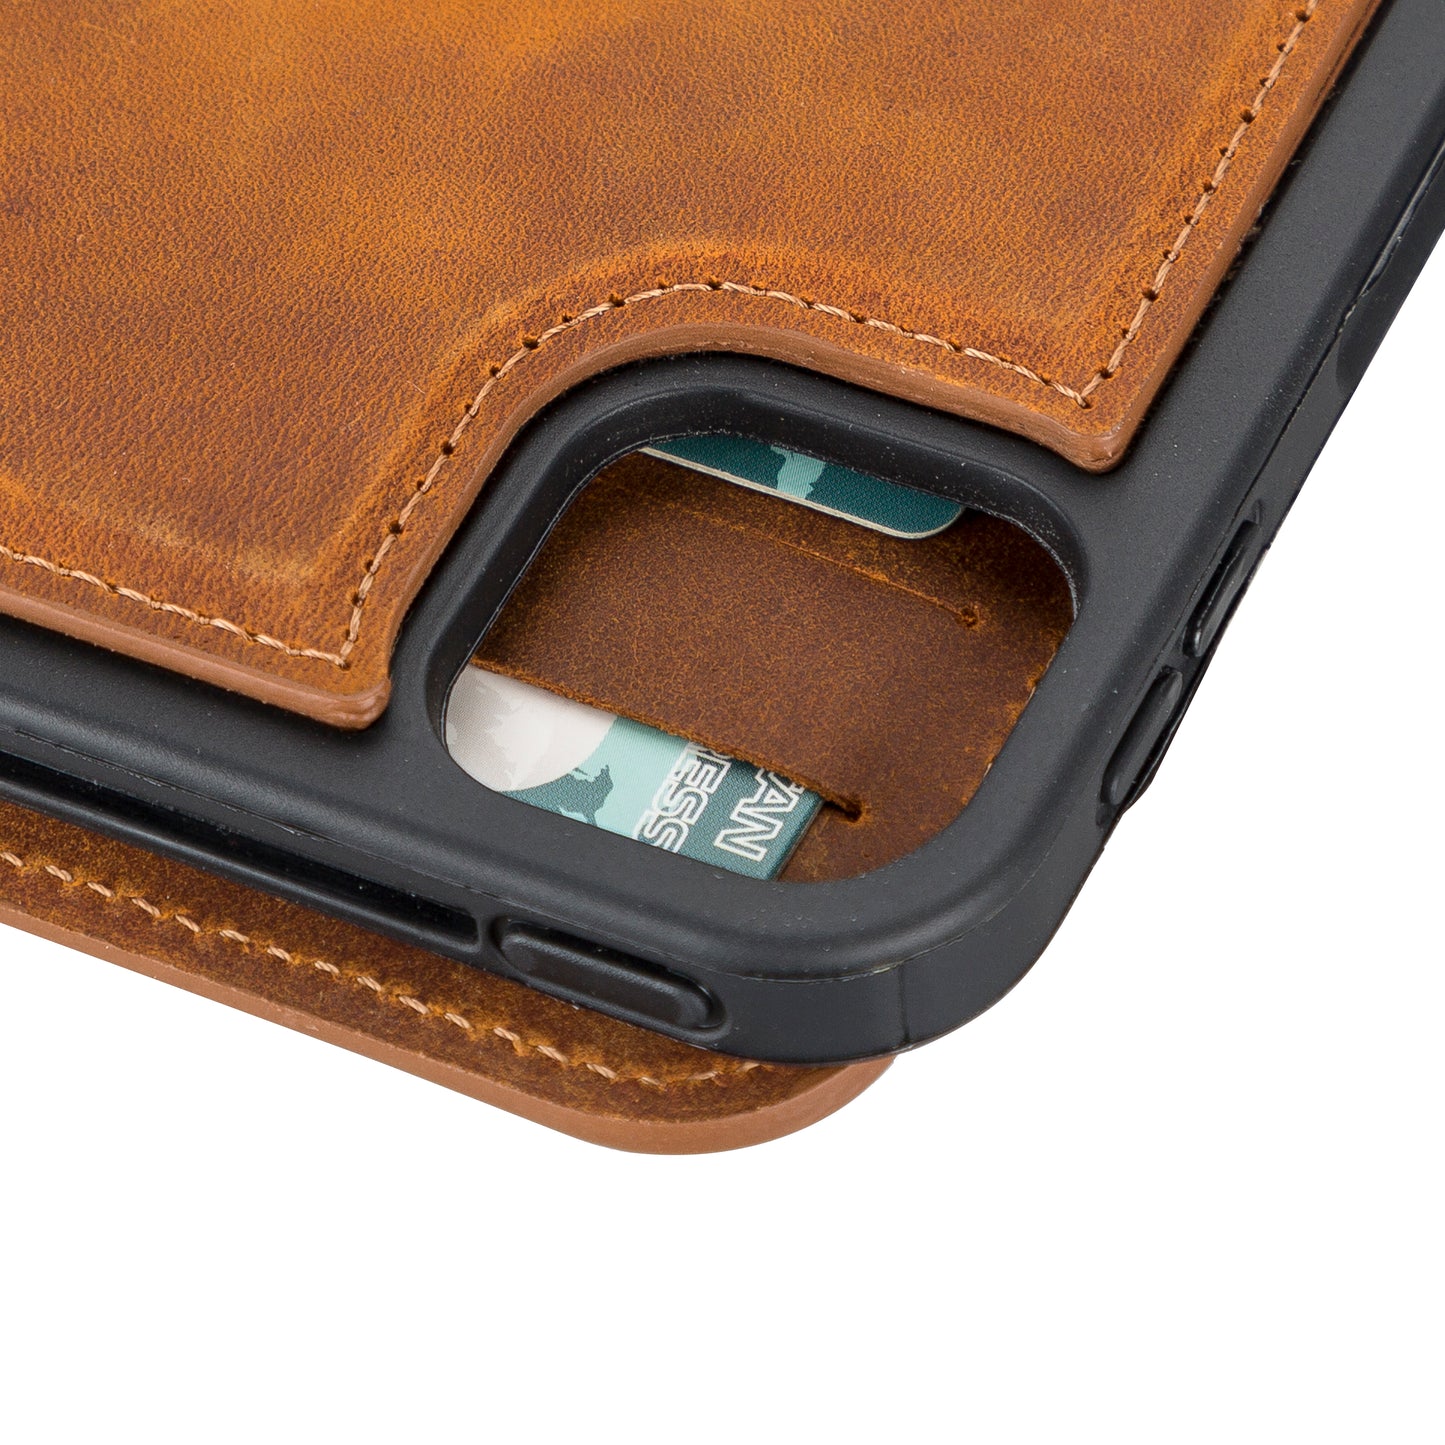 Apple iPad Pro (12.9") Leather Detachable Wallet Case - Brown